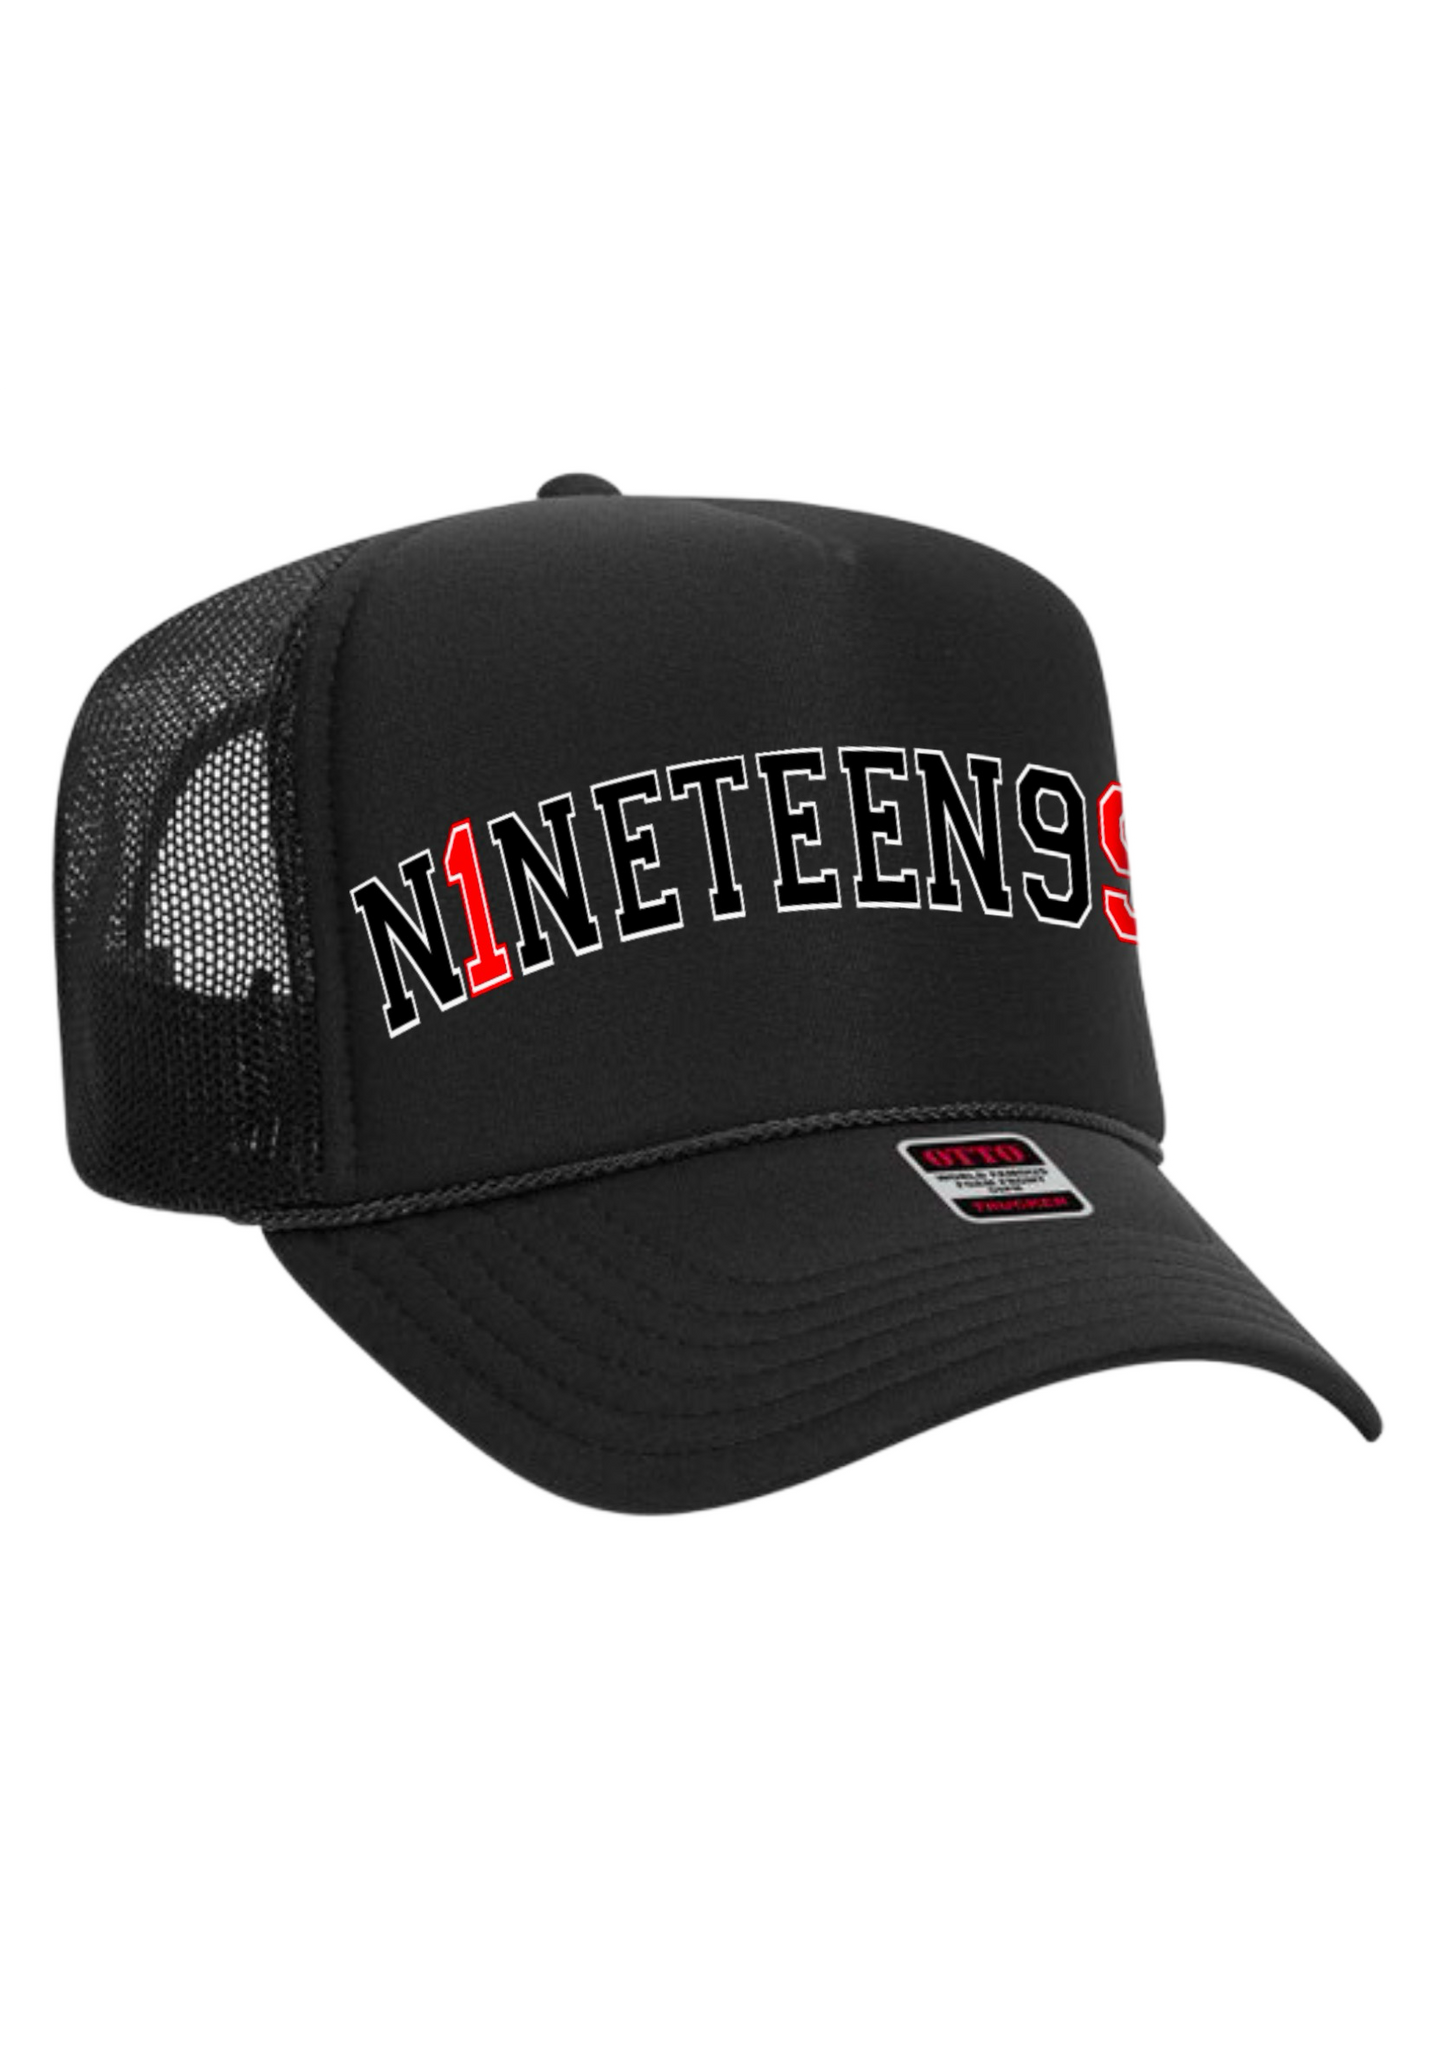 Black NineTeen99 Hat